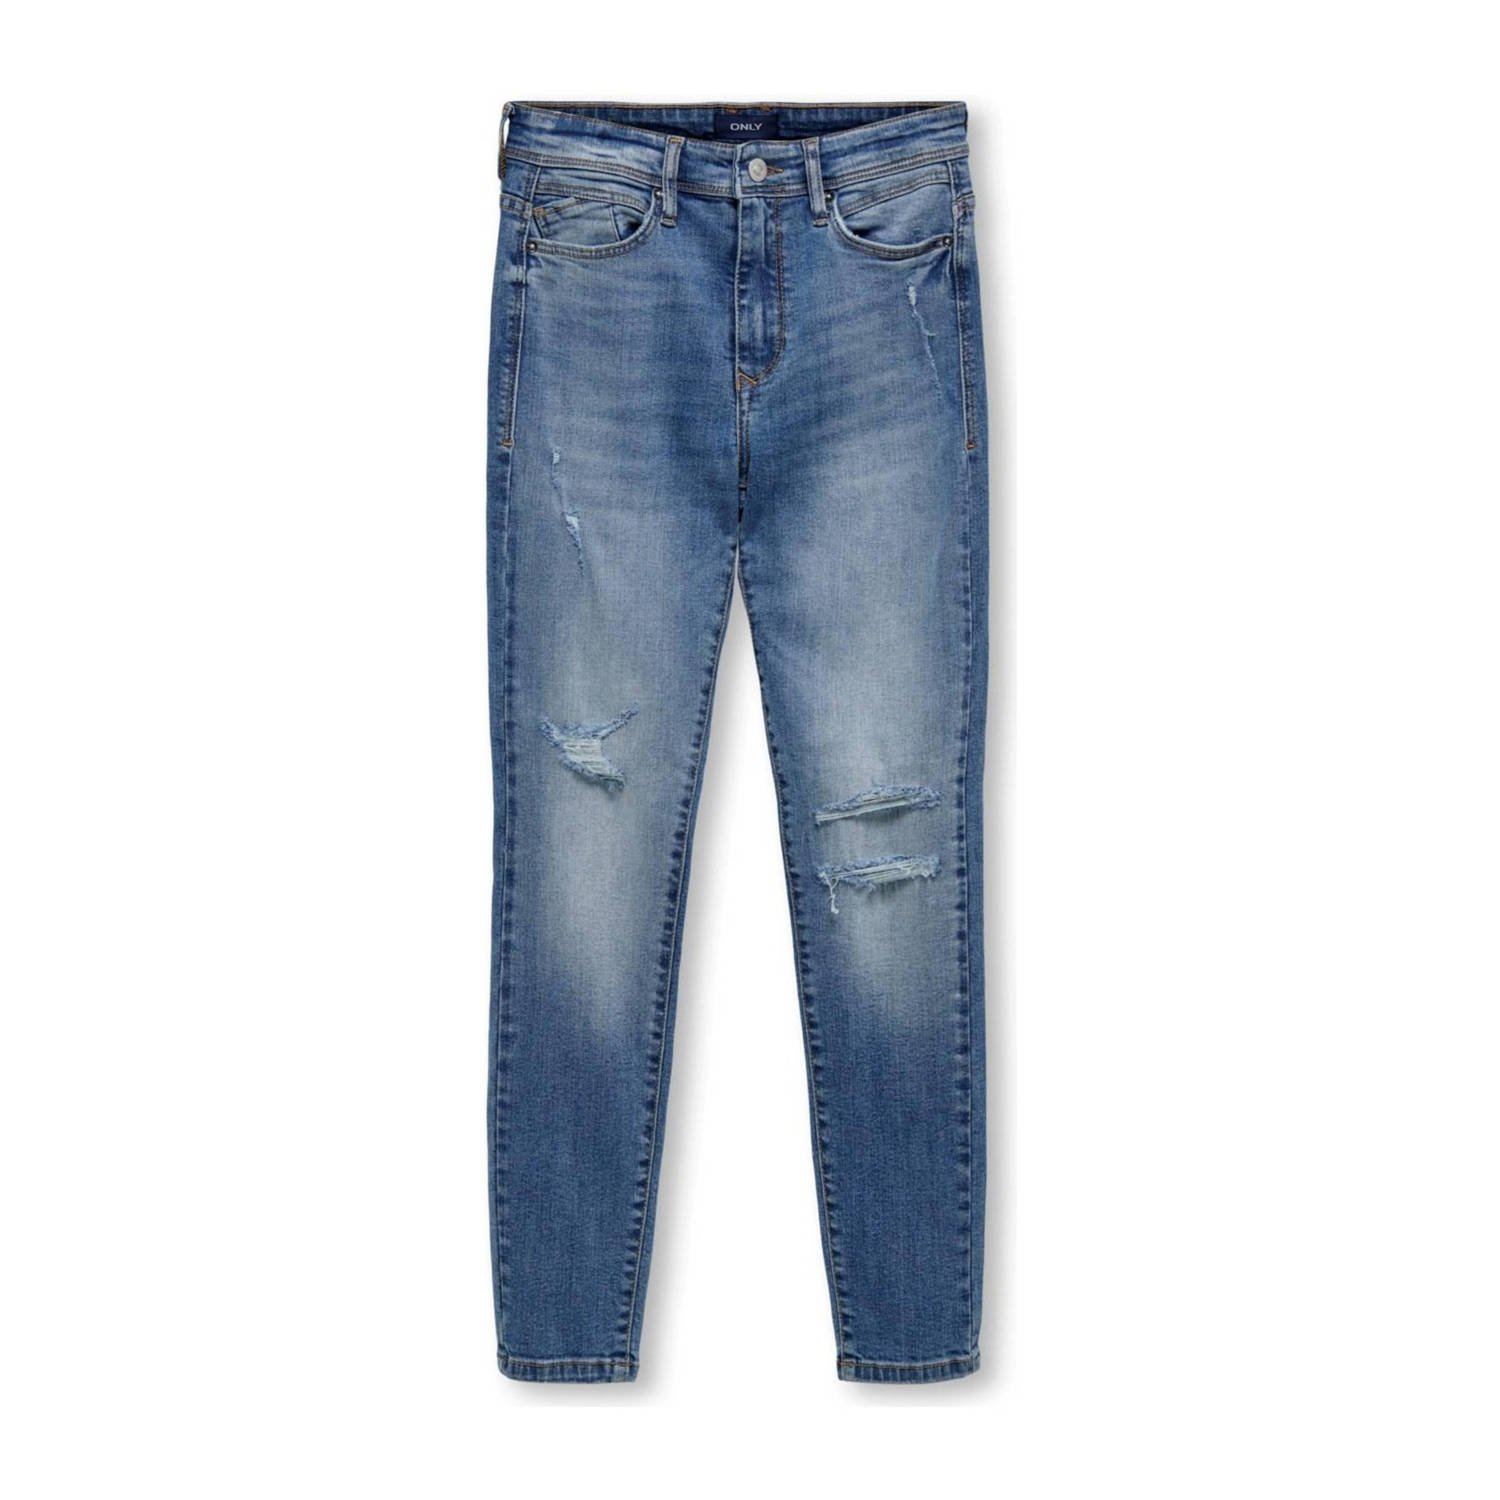 Only KIDS BOY tapered fit jeans KOBALEC light medium blue denim Blauw Jongens Stretchdenim 128